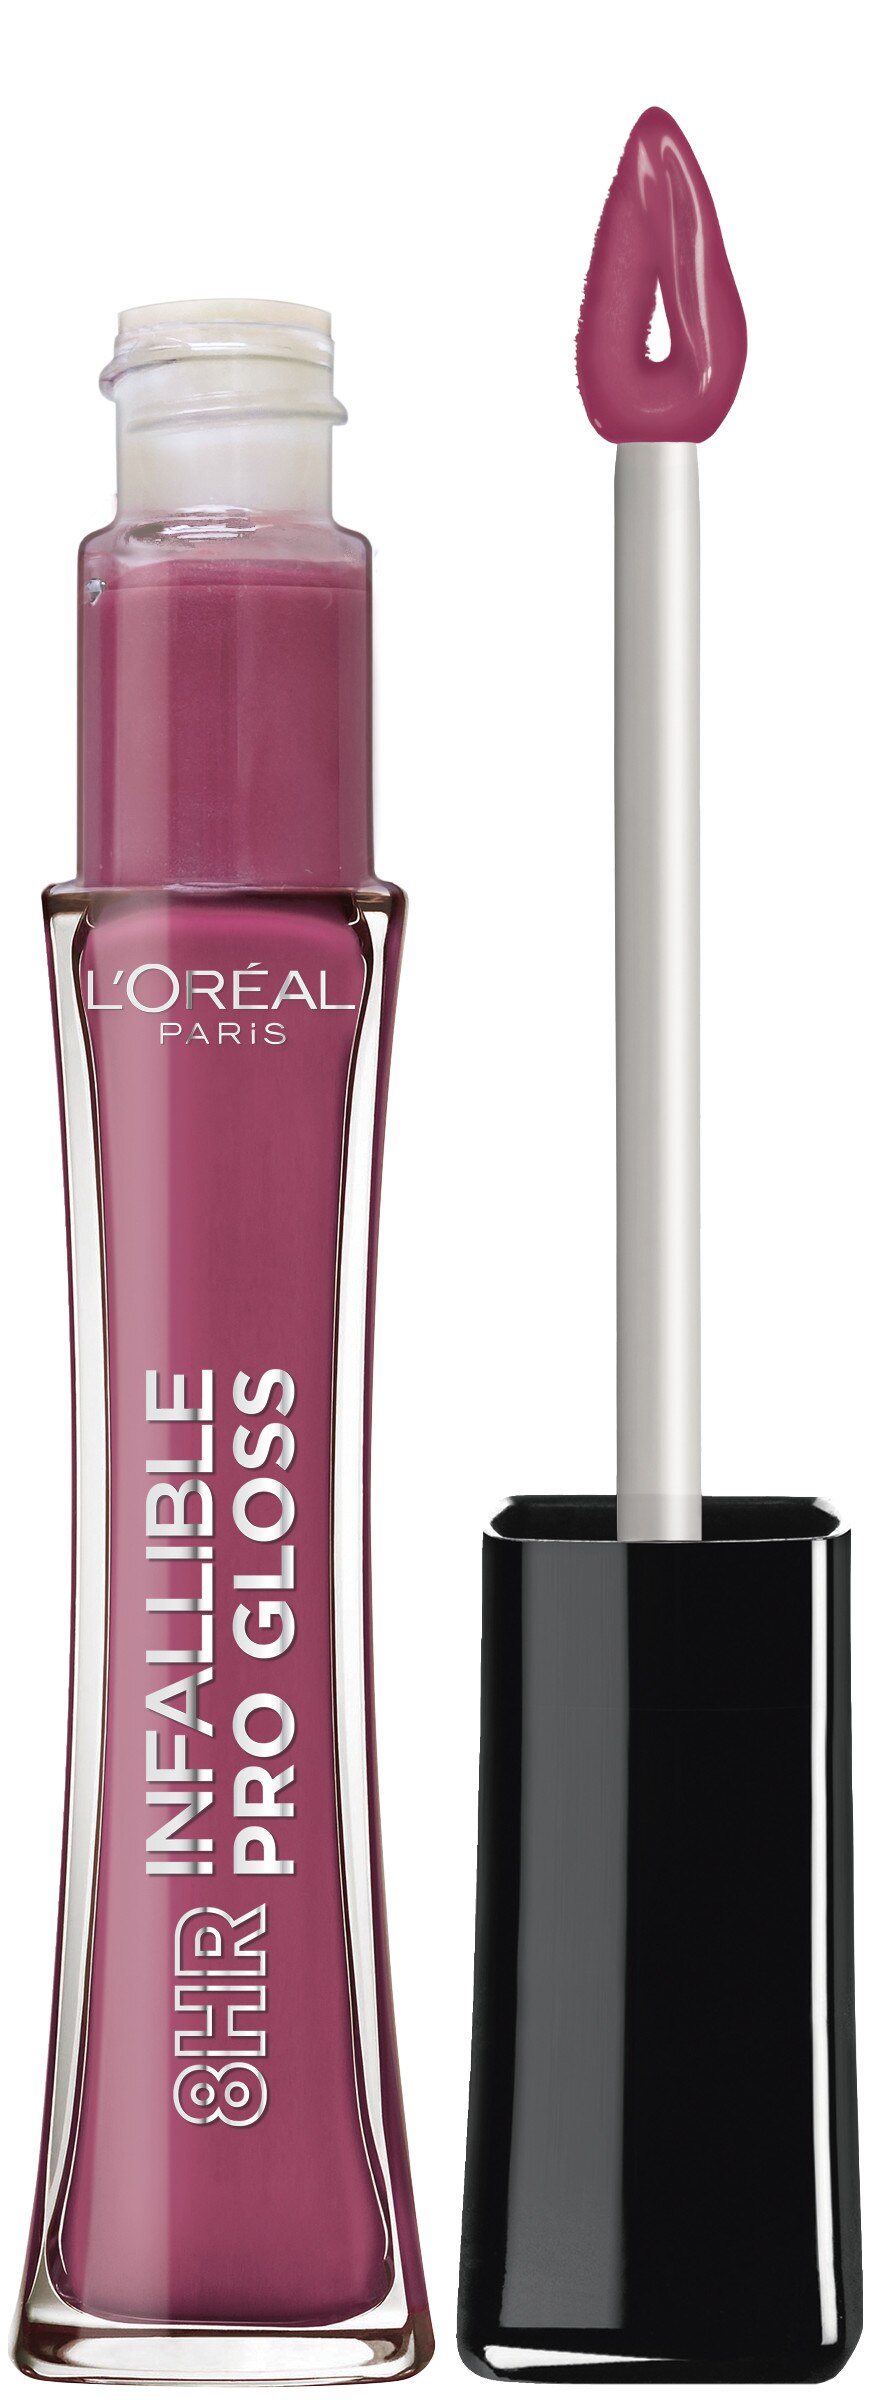 L'Oreal Paris Infallible 8HR Never Fail Lip Gloss